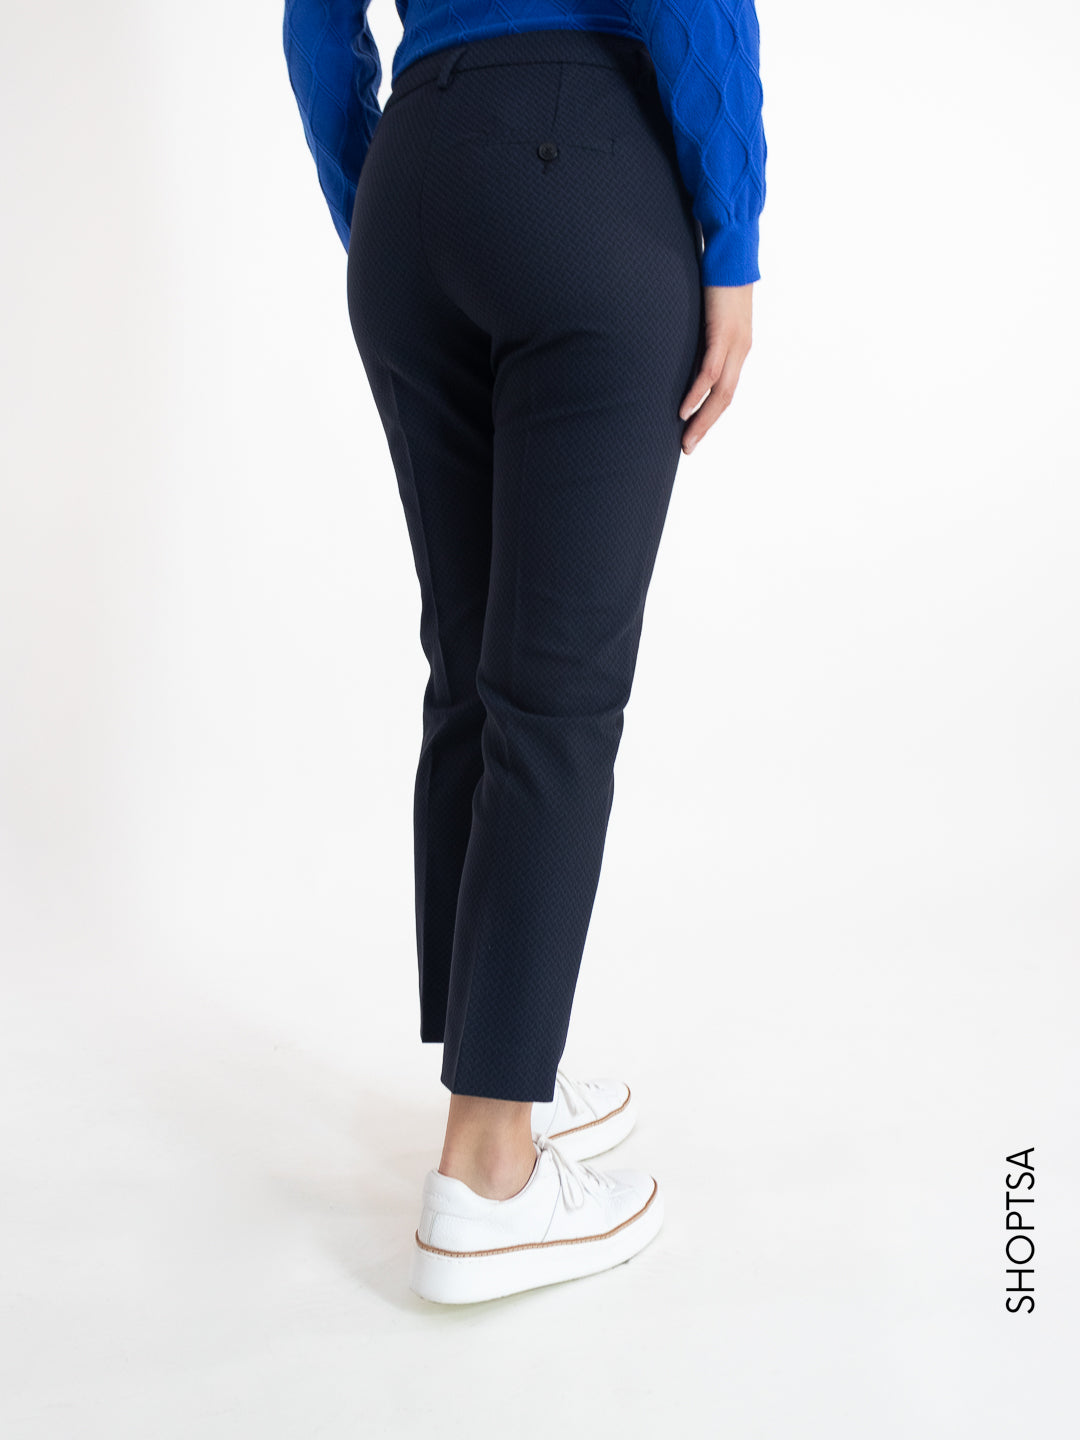 GEGIA jacquard cotton trousers - EMME Marella